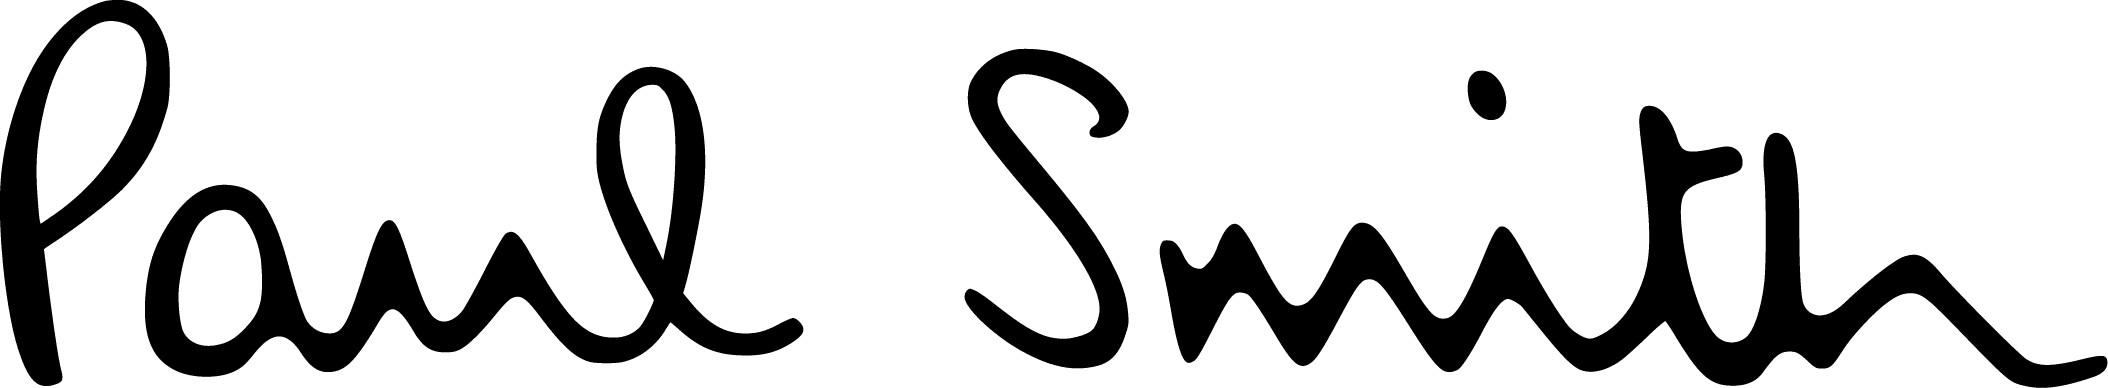 Paul Smith Logo - PNG Logo Vector Downloads (SVG, EPS)